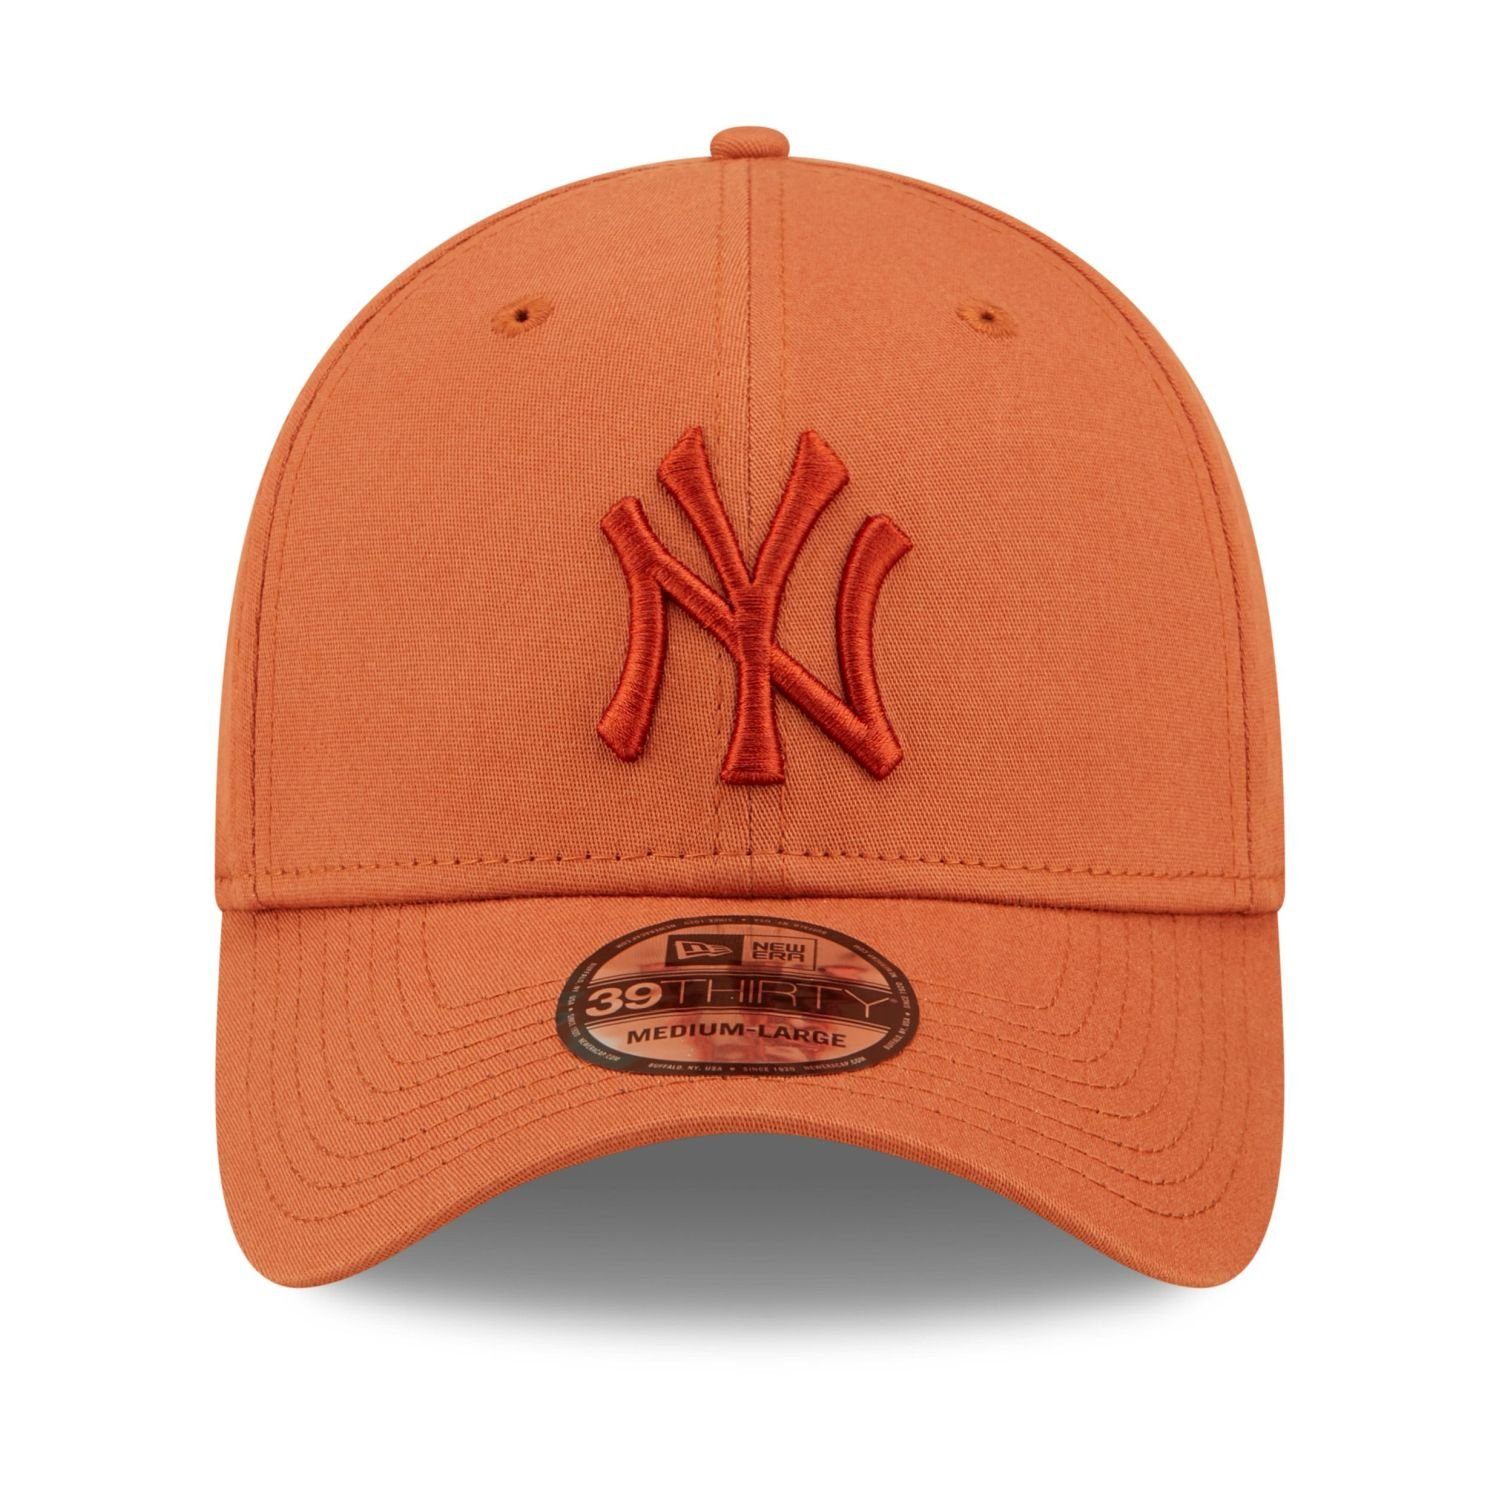 New Stretch York orange Flex Era 39Thirty Yankees New Cap